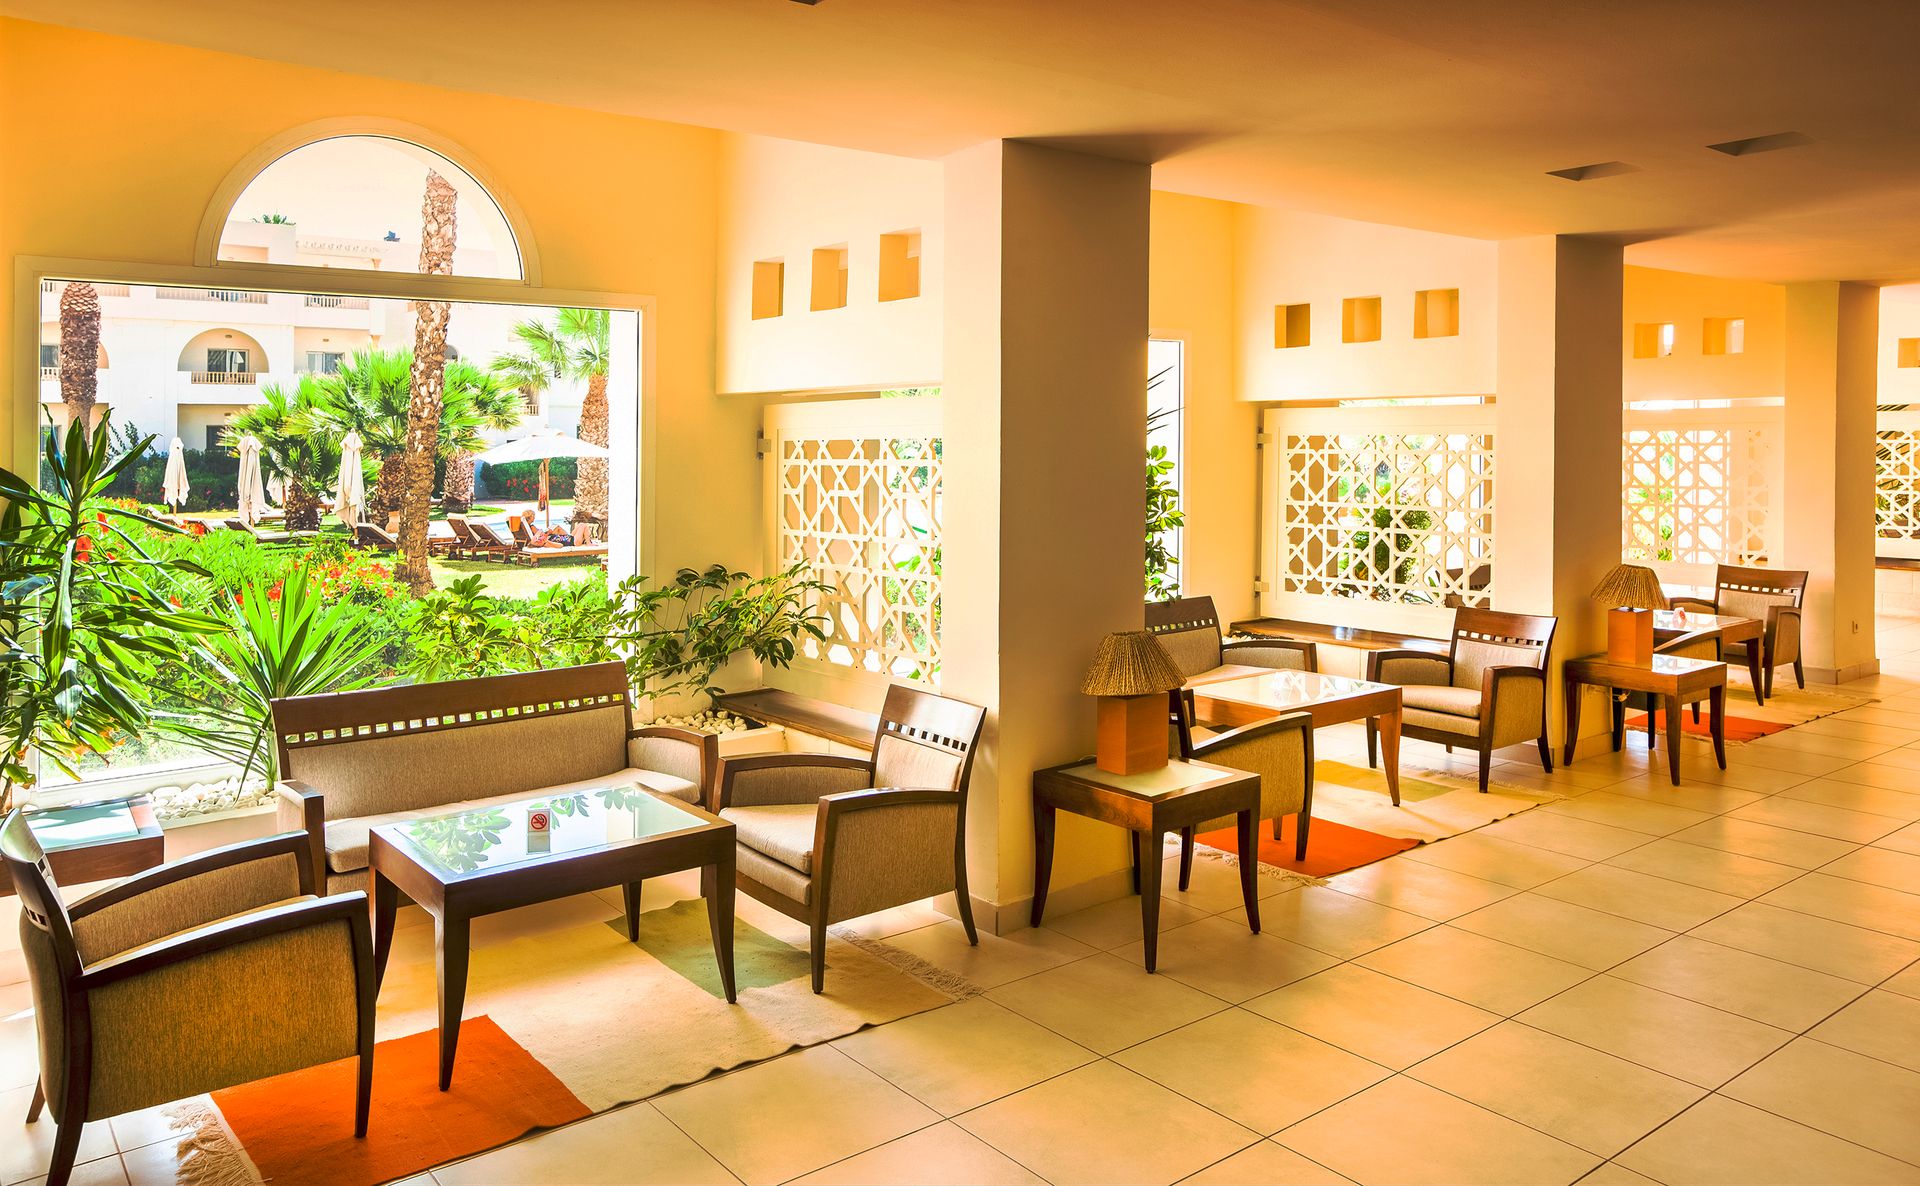 Tunisie - Nabeul - Hotel Calimera Delfino Beach Resort & Spa 4*